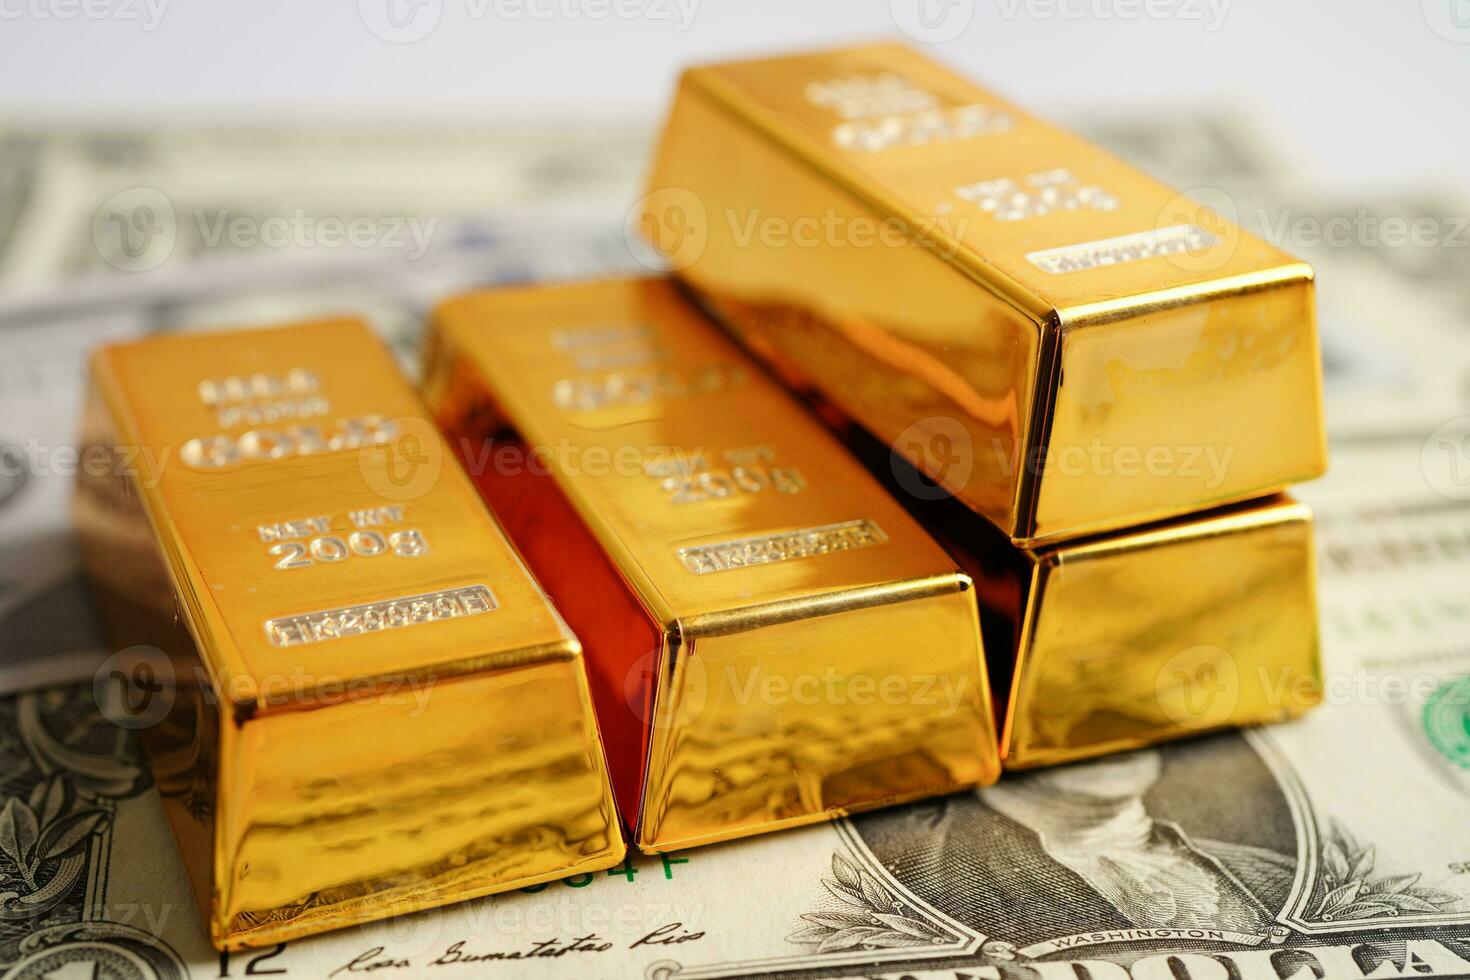 goud bars Aan ons dollar bankbiljet geld, financiën handel investering bedrijf valuta concept. foto